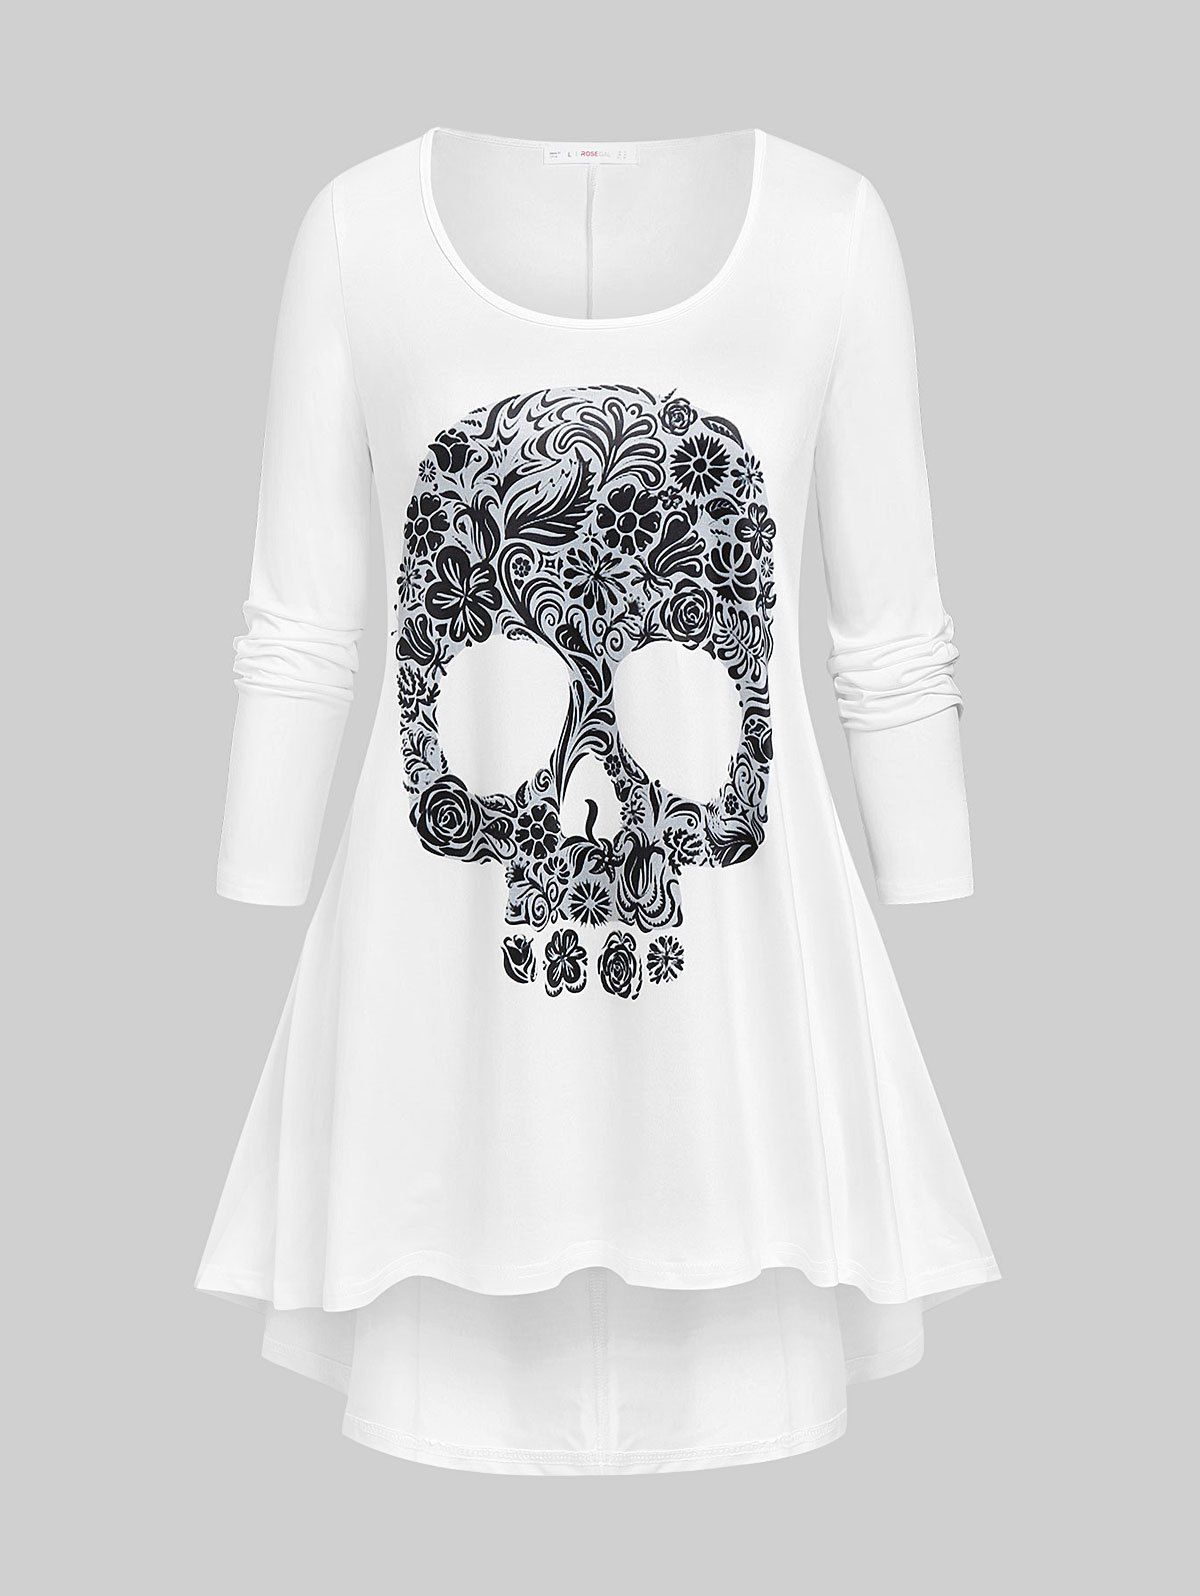 Plus Size Skull Print High Low Halloween T-shirt - WHITE 5X